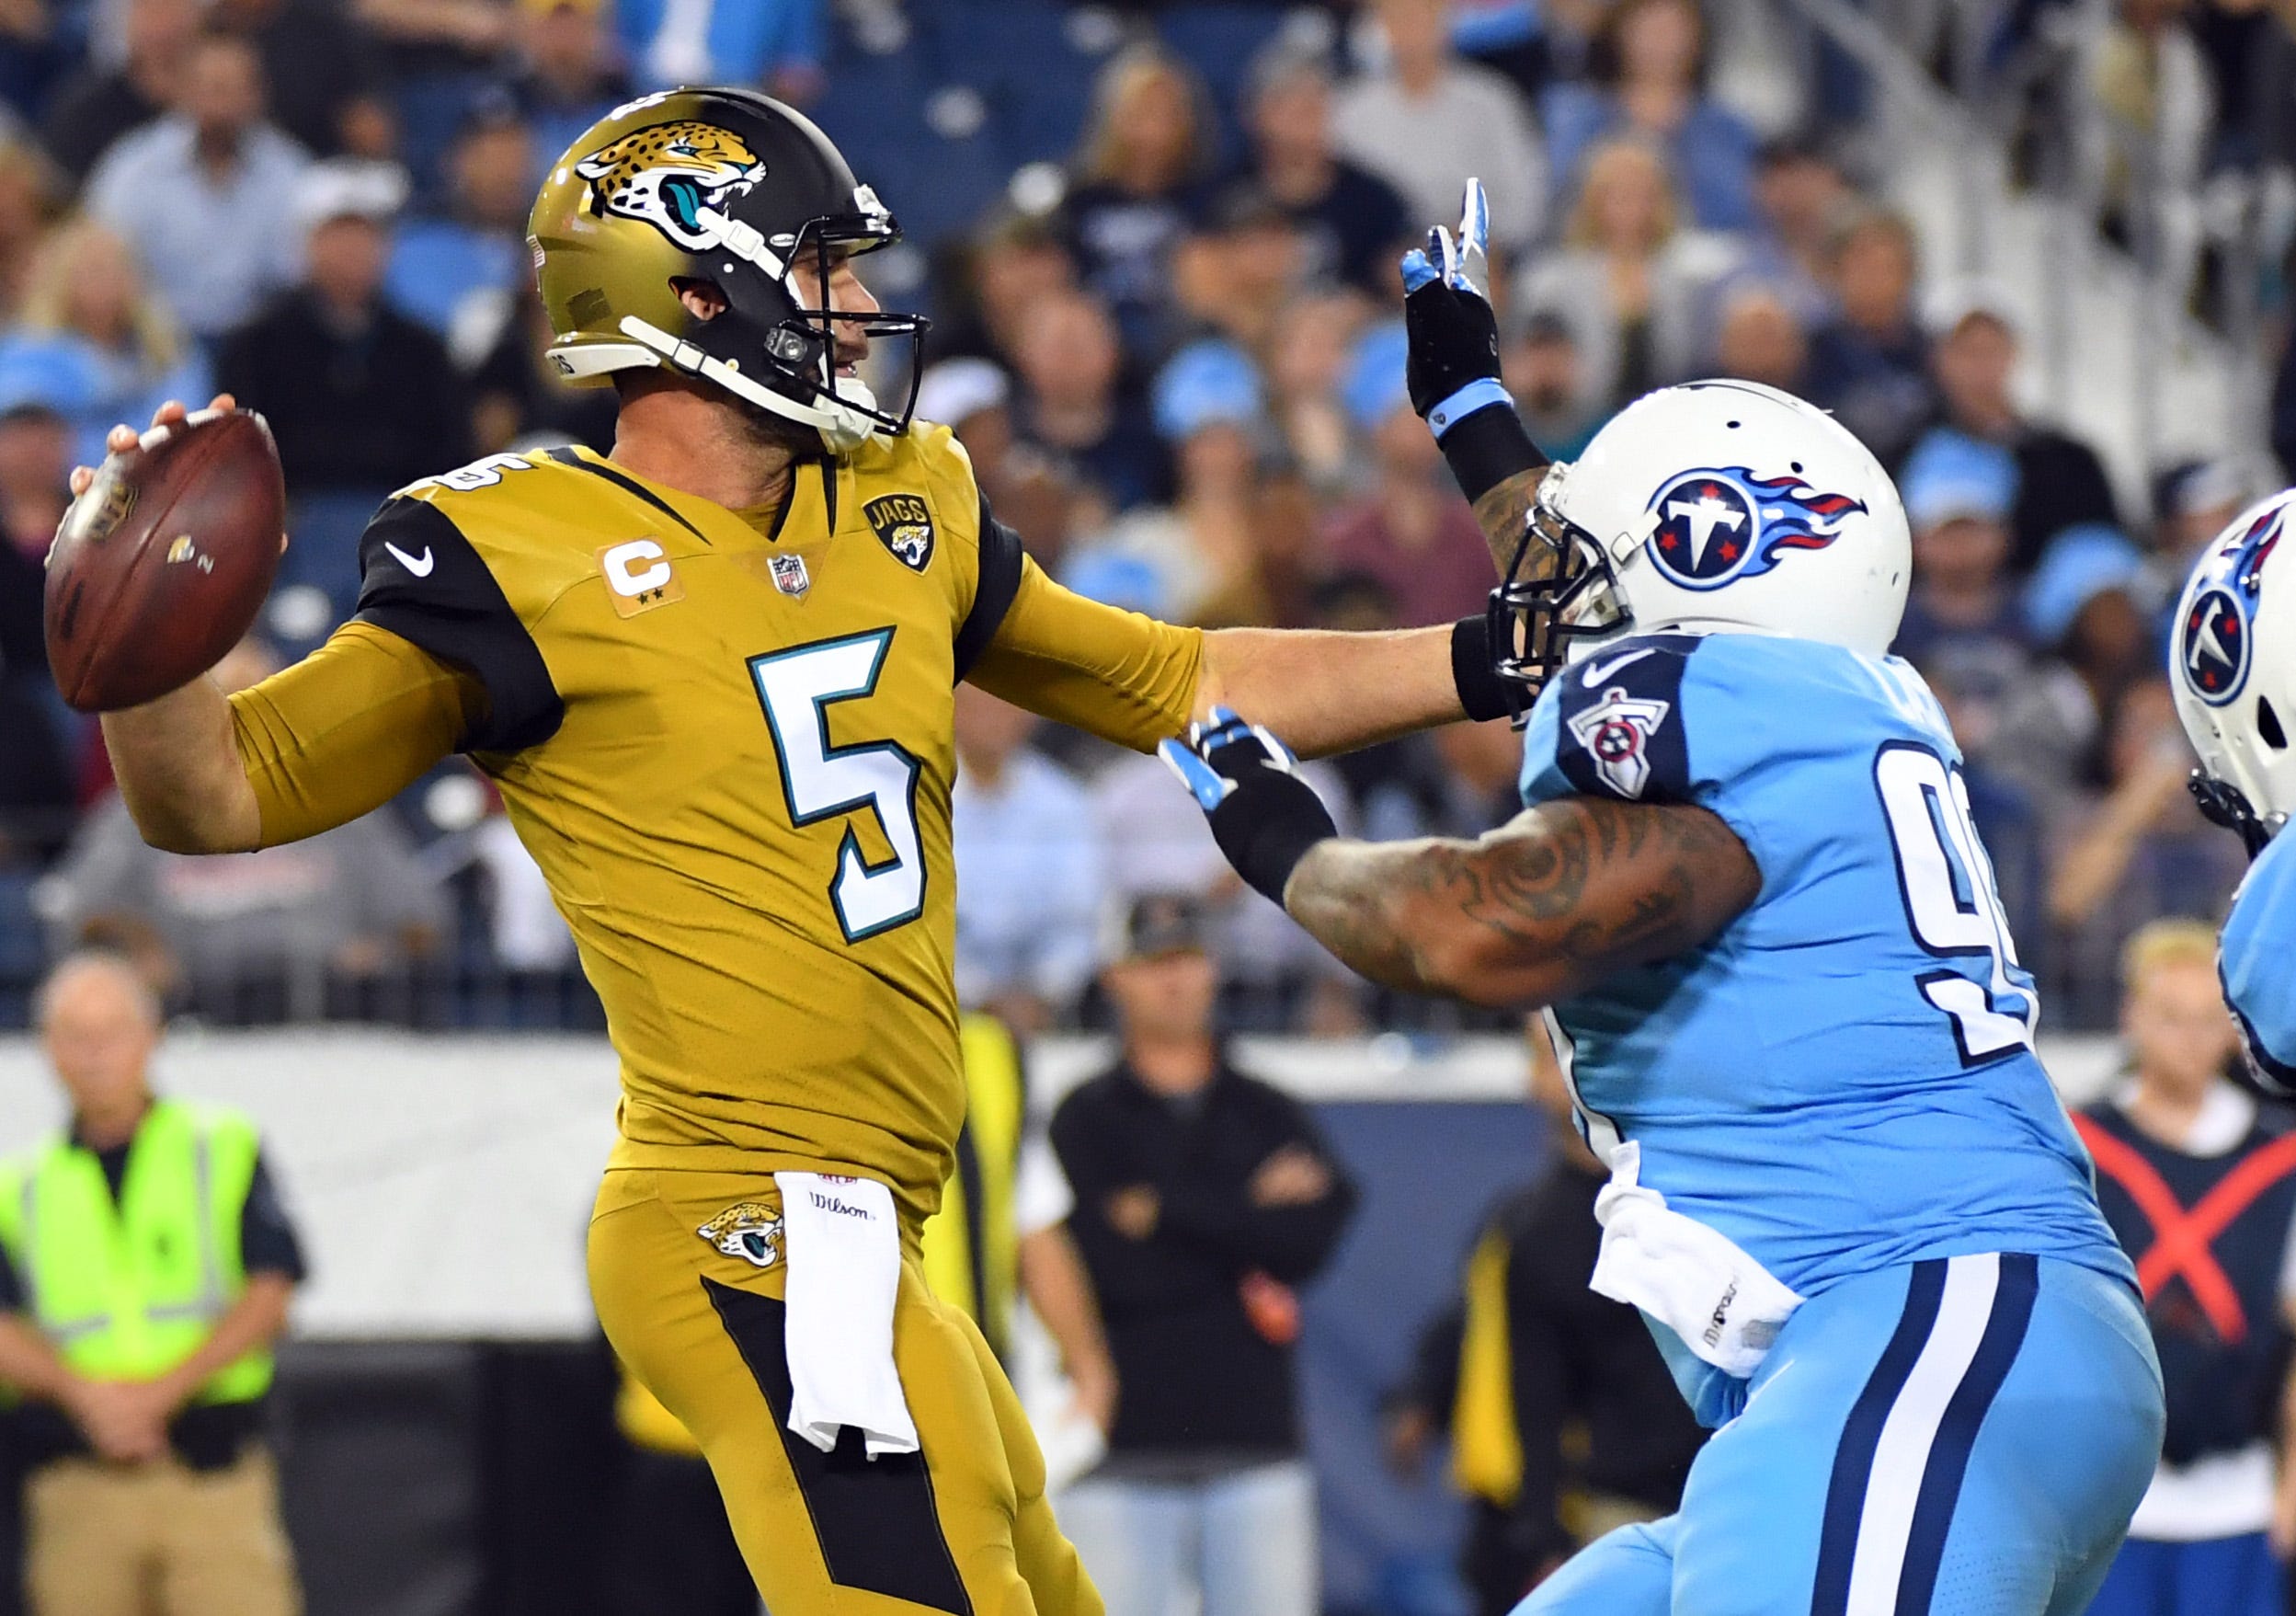 NFL worst uniforms: Panthers, Jaguars 